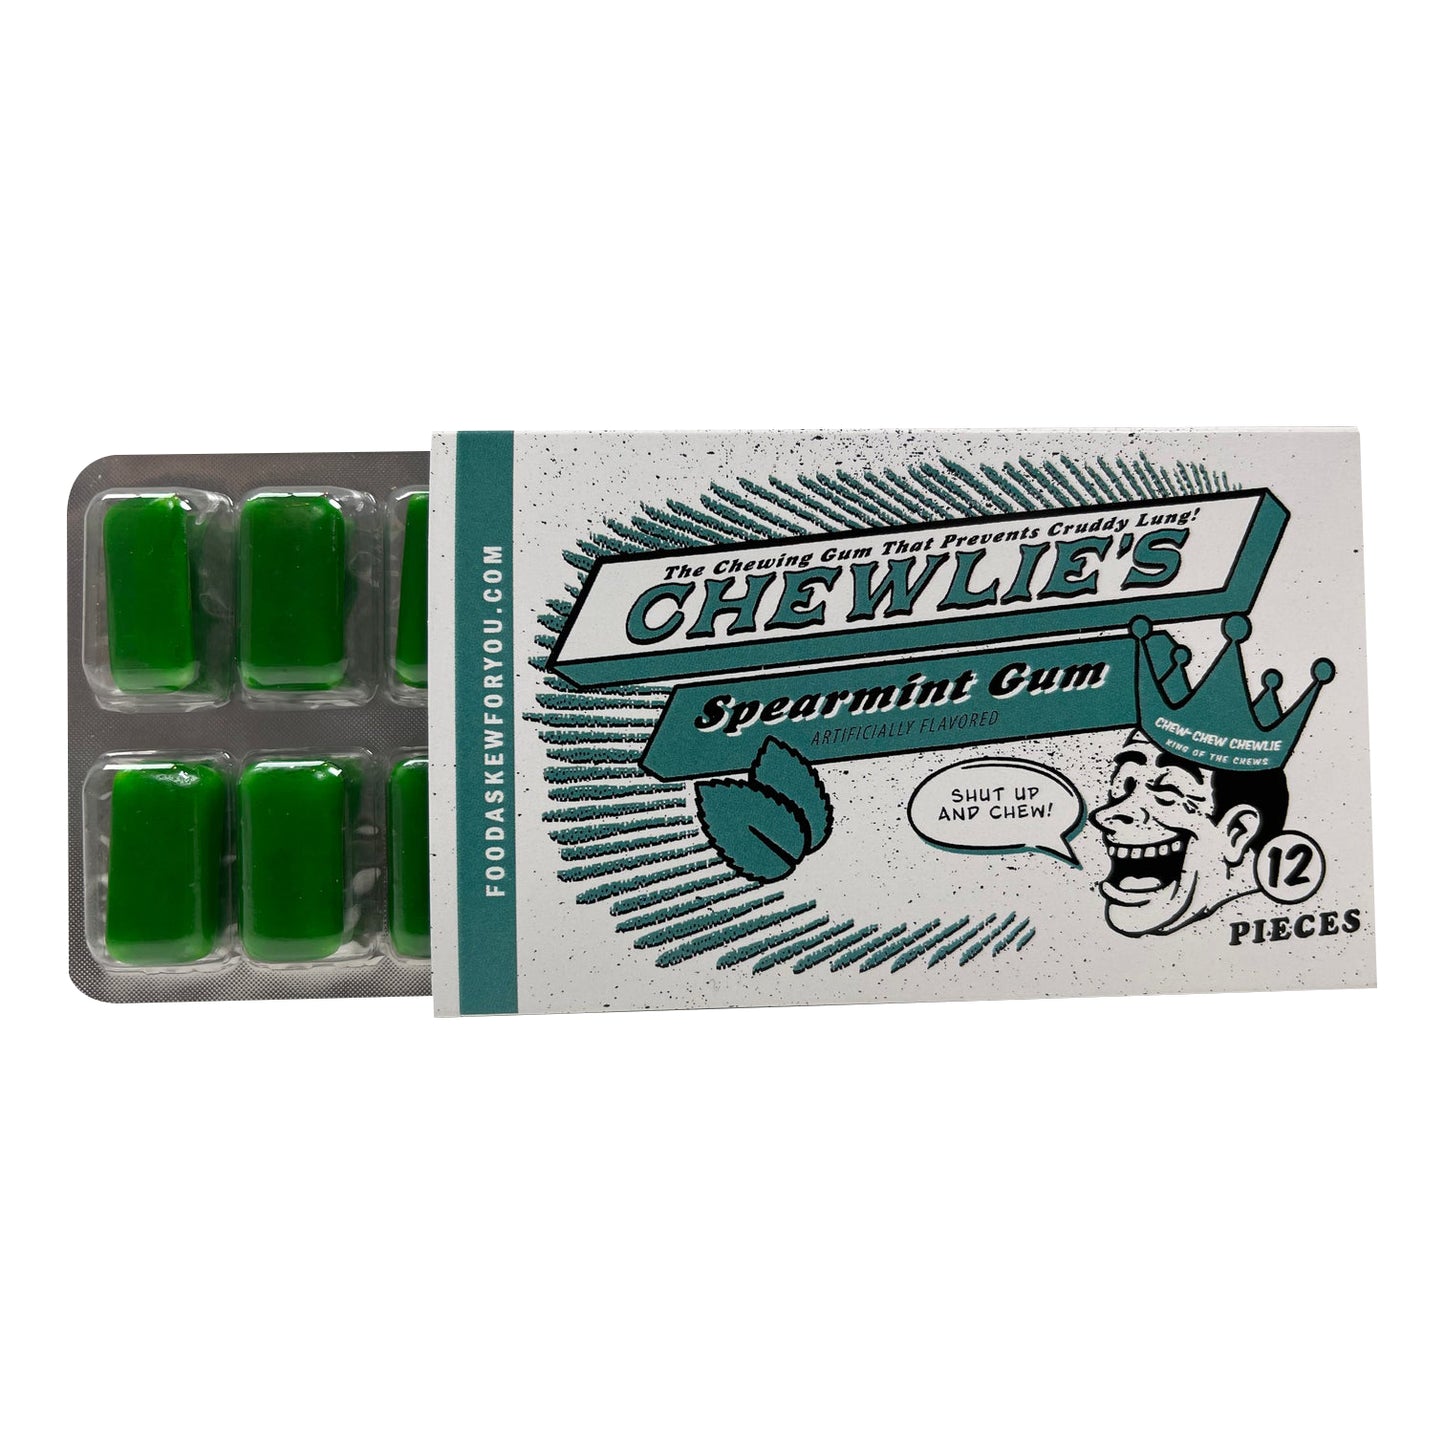 Chewlie's Spearmint Gum